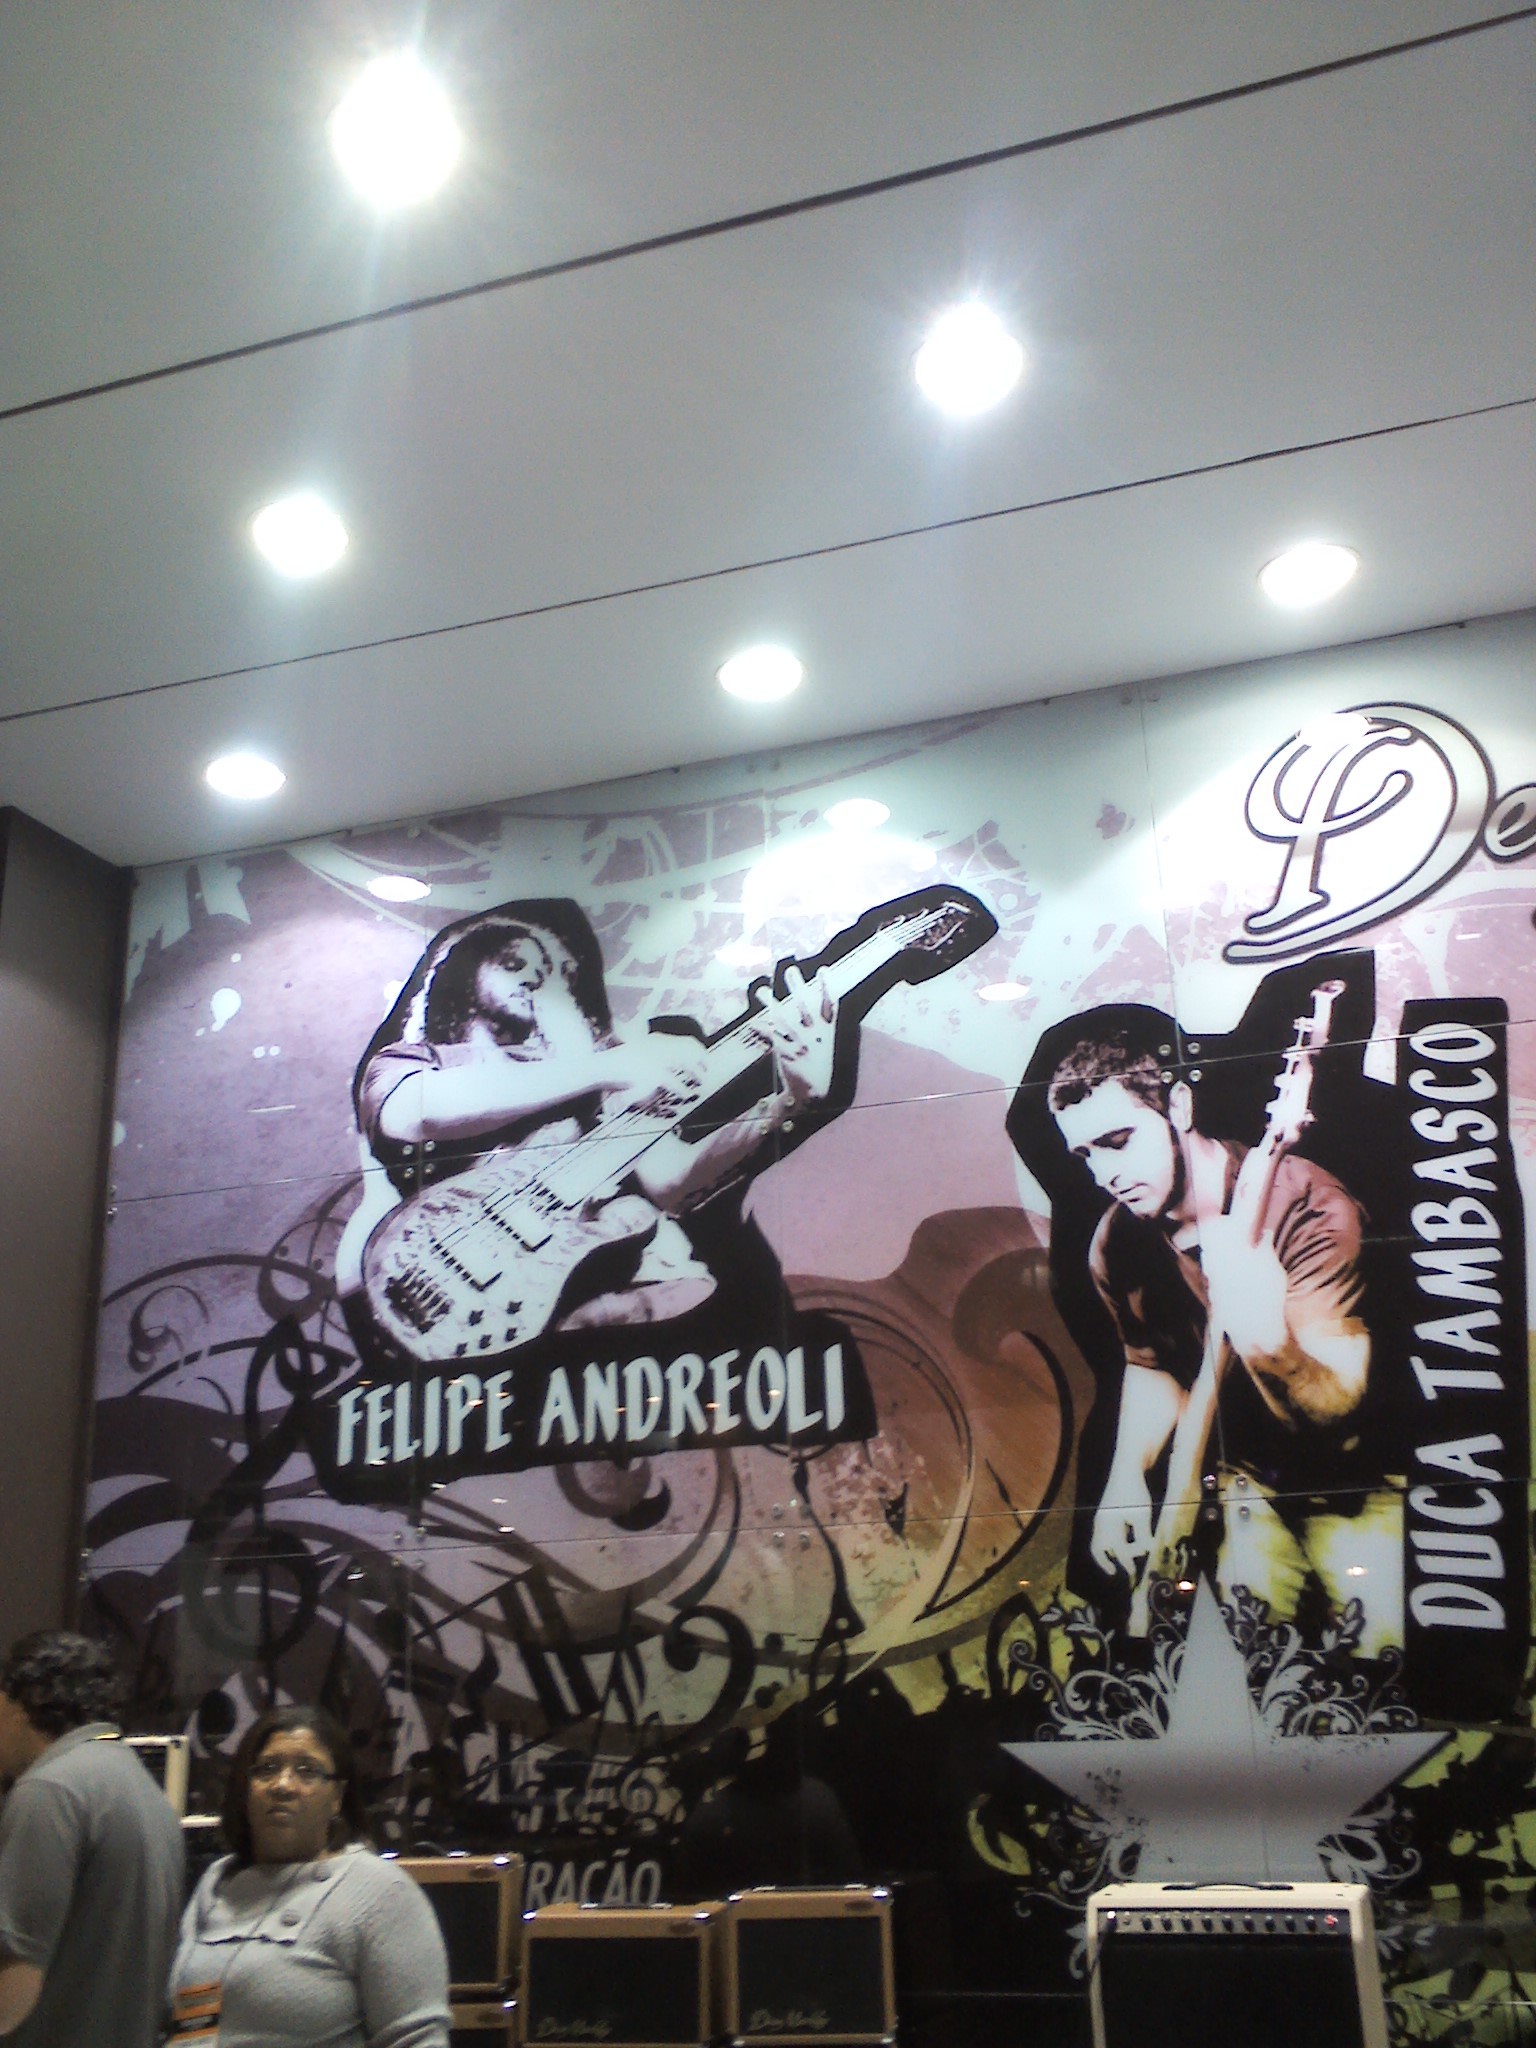 Felipe Andreoli só assim: pintado na parede!